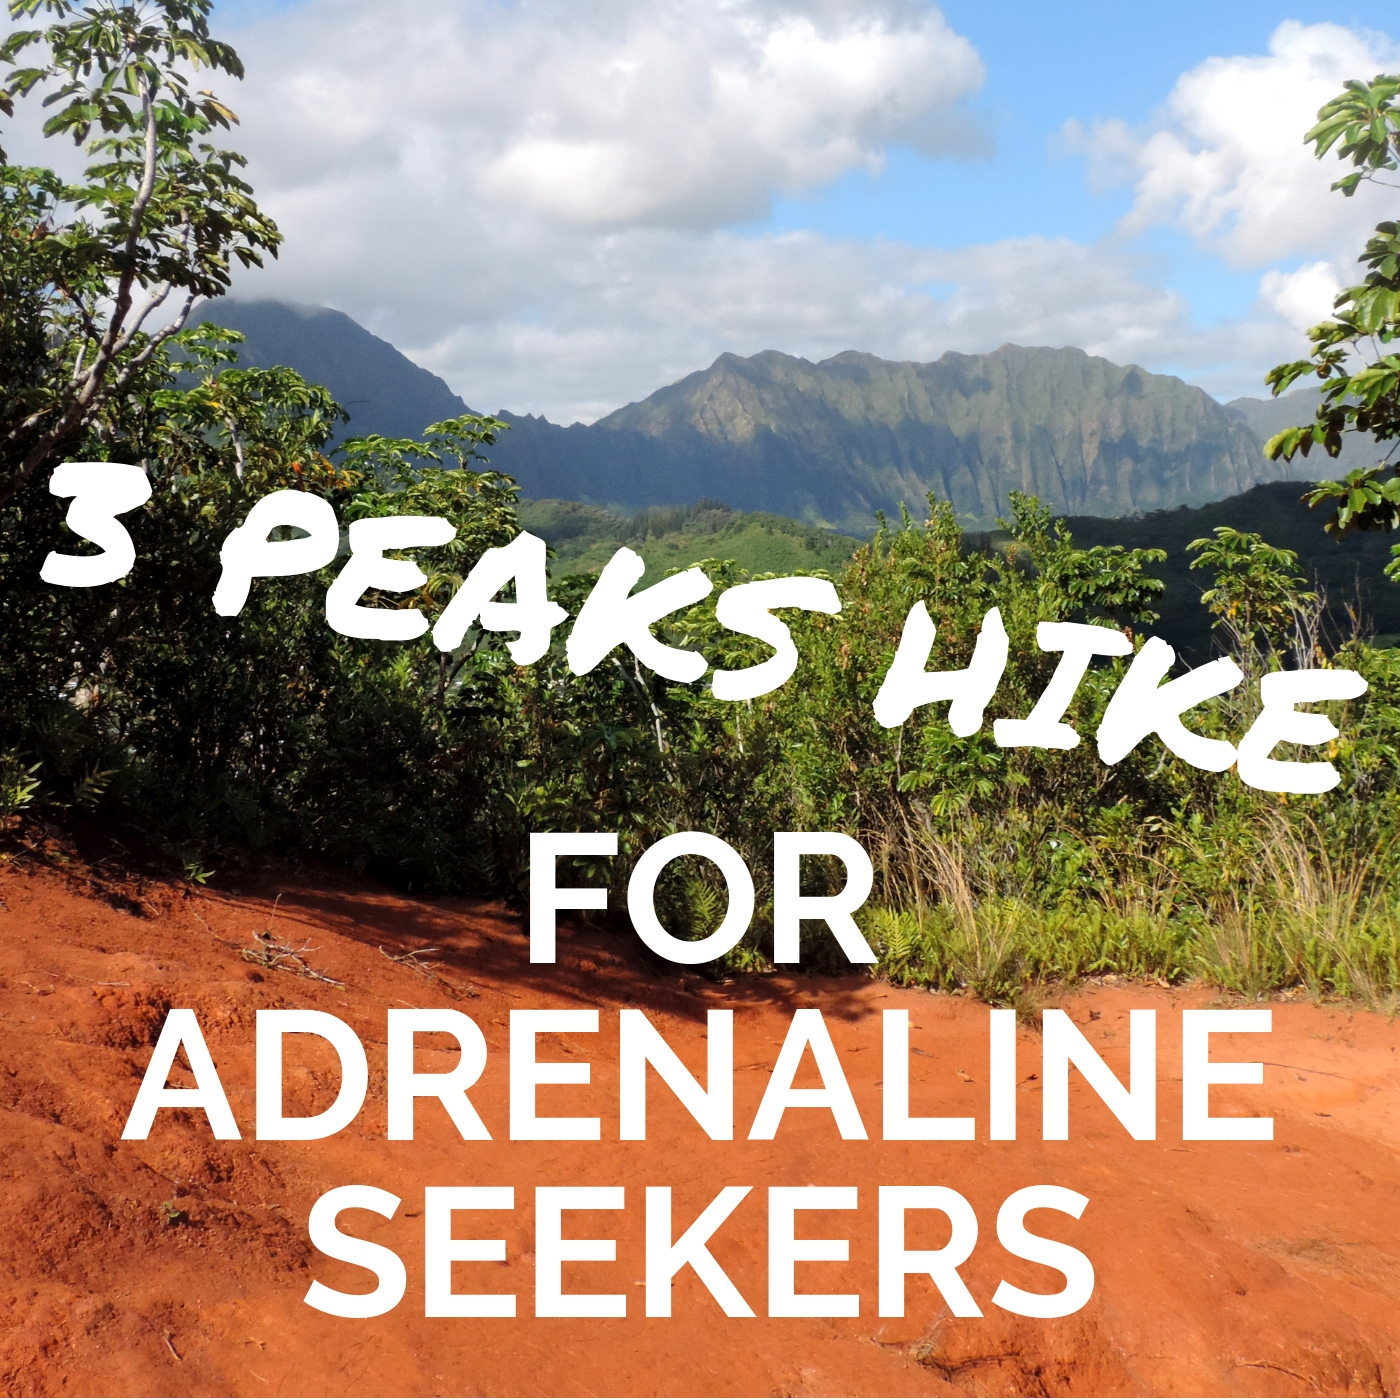 3 Peaks hike for adrenaline seekers, Olomana hike, Oahu hiking, hiking Hawaii, Widly intrepid